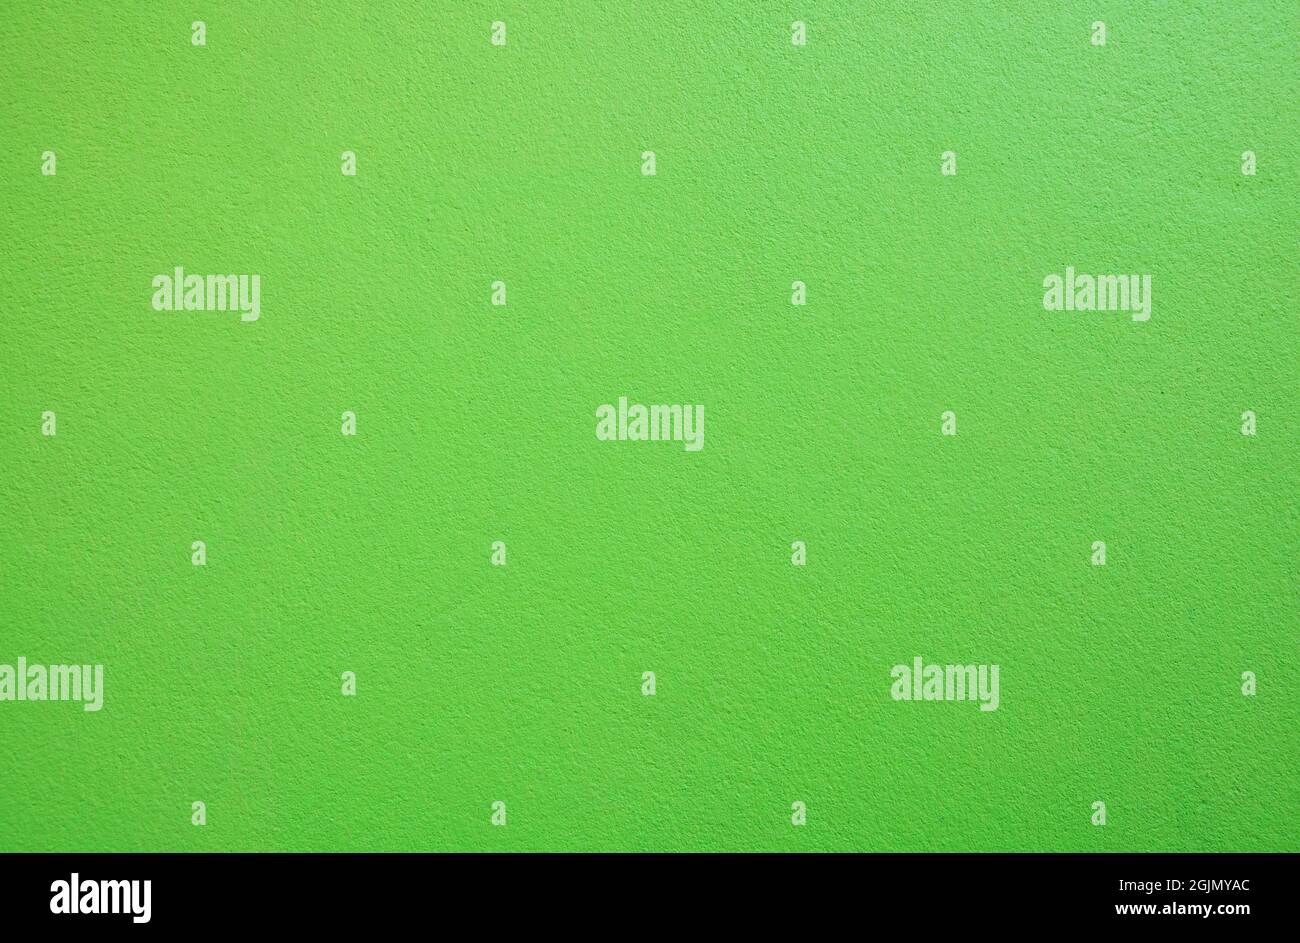 Lime Green Neon Paint Splatter Seamless Digital Paper Background